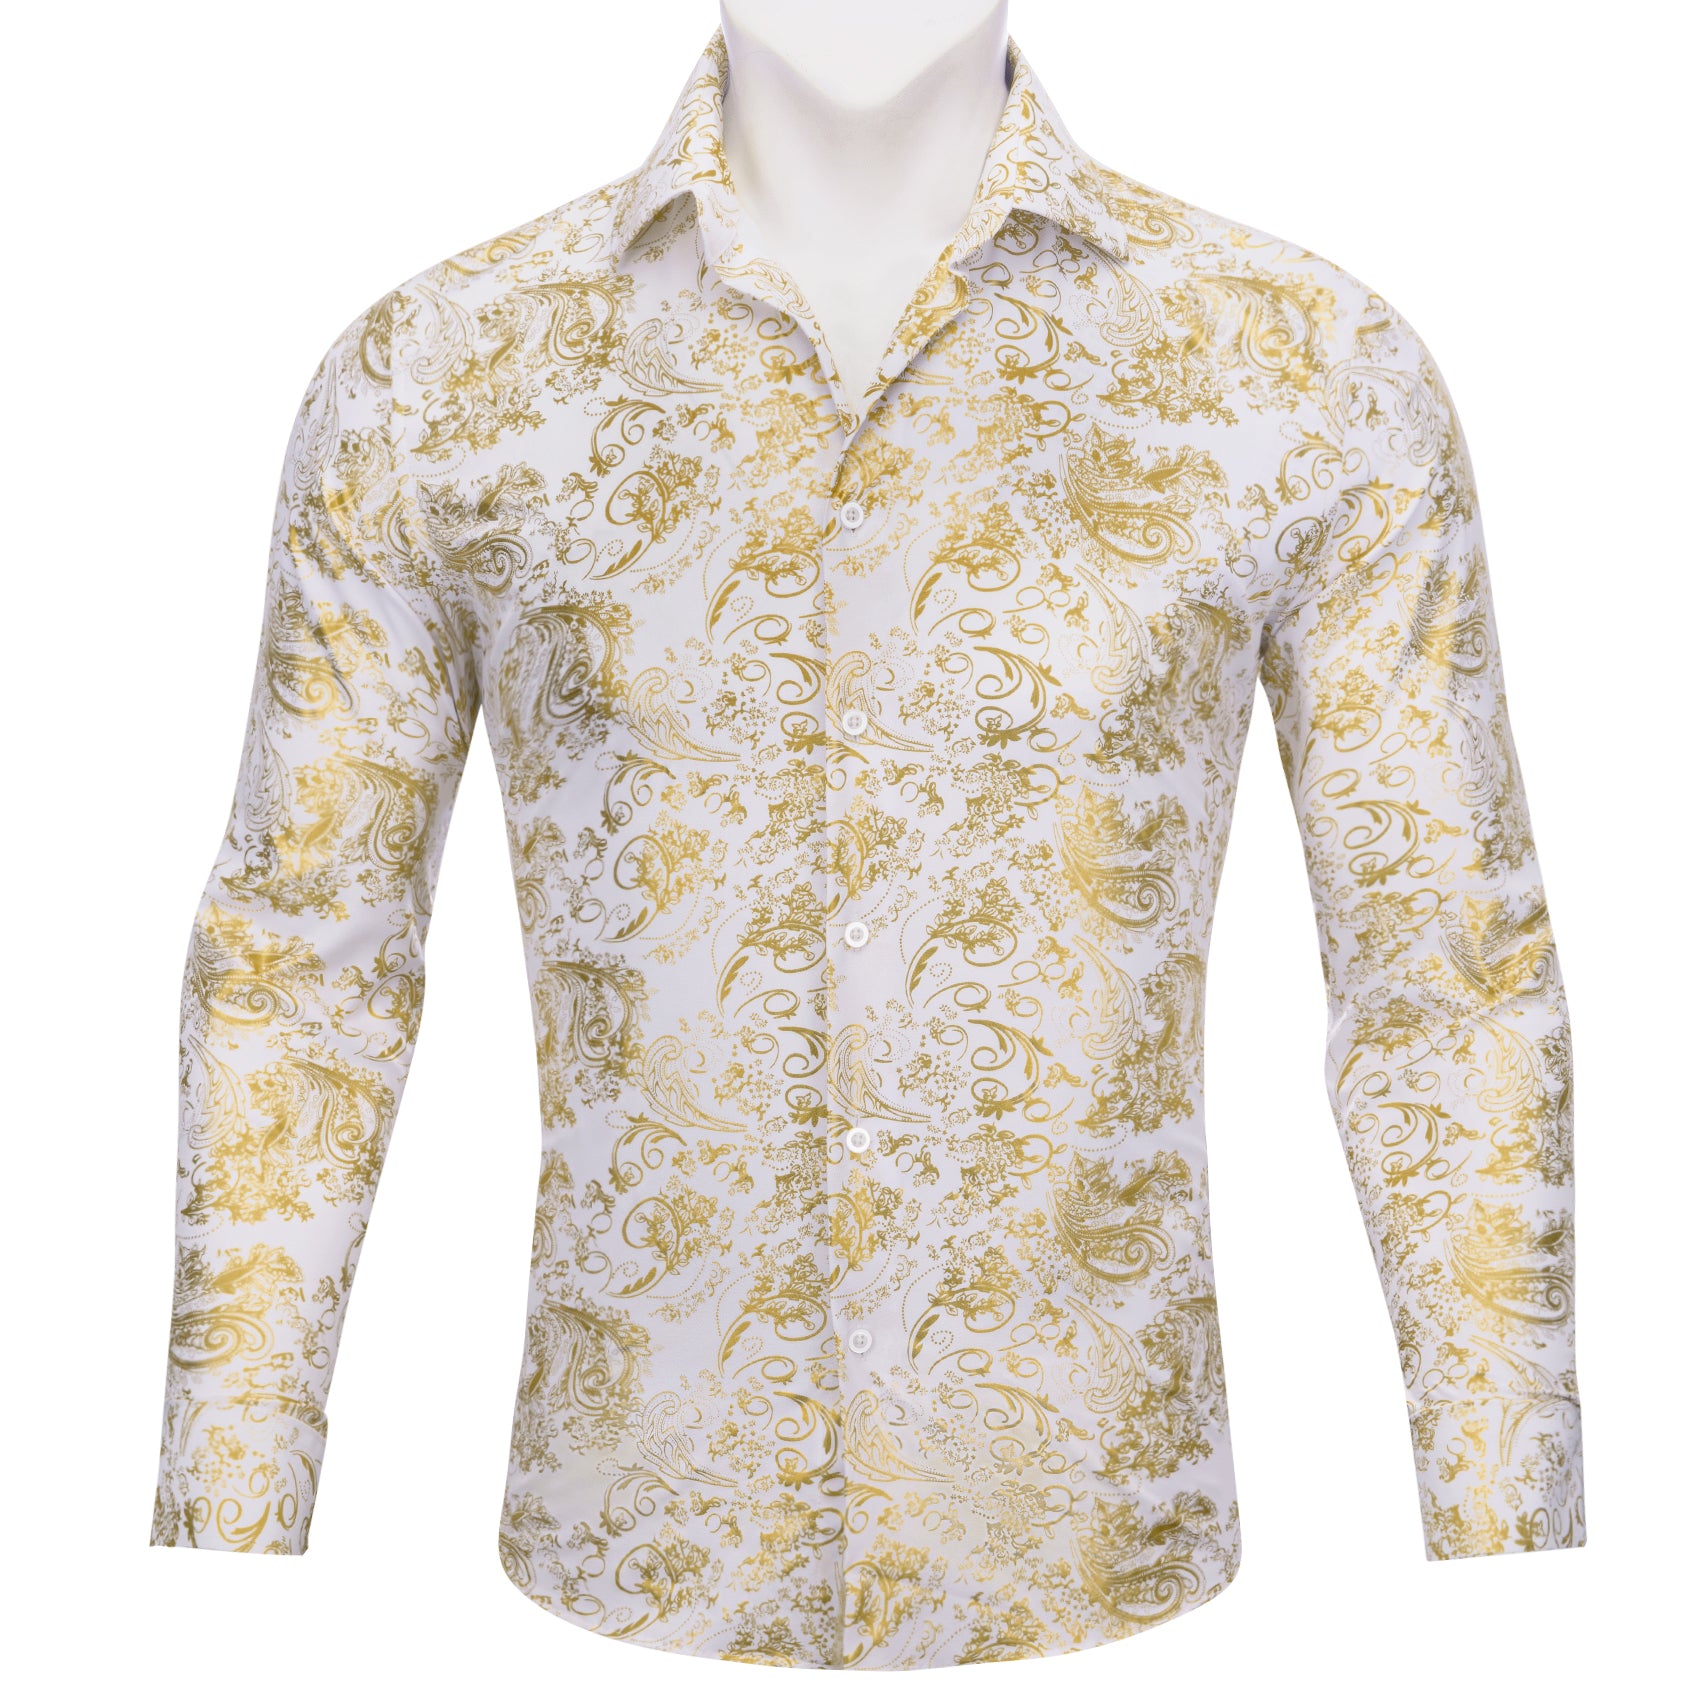 White Gold Paisley Silk Shirt causal shirts for men  gold pattern white shirt